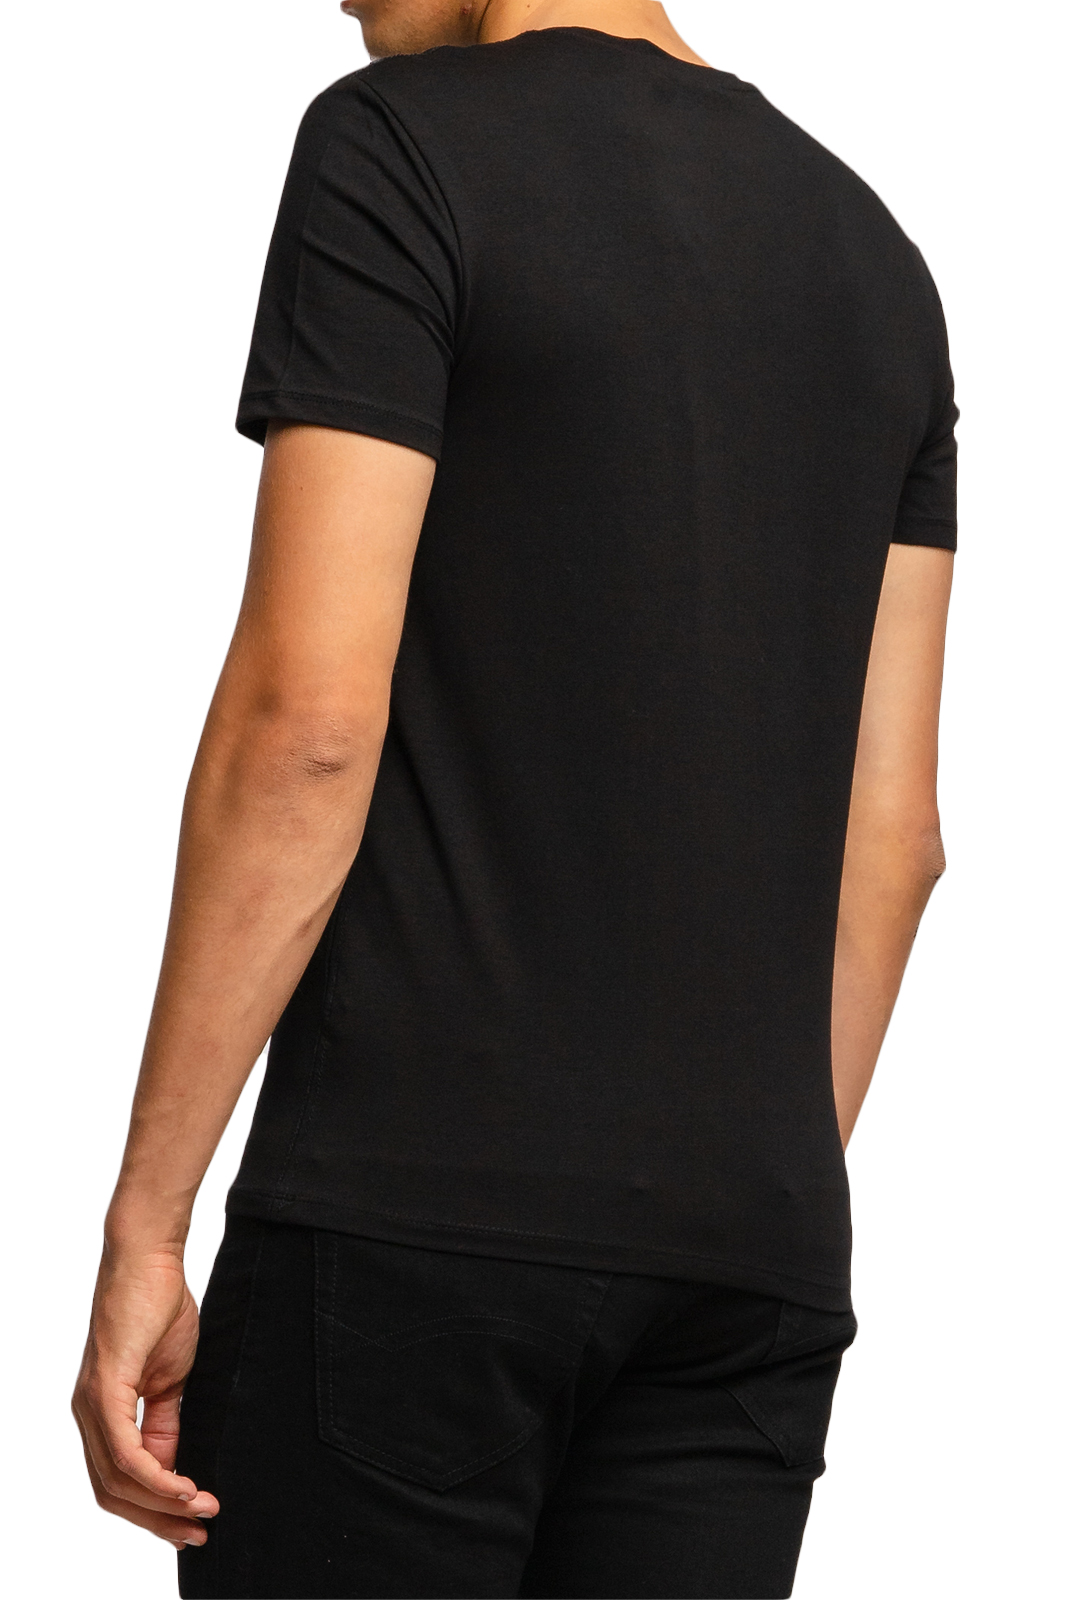 Tee-shirt slim noir col en v Guess -  M0bi32